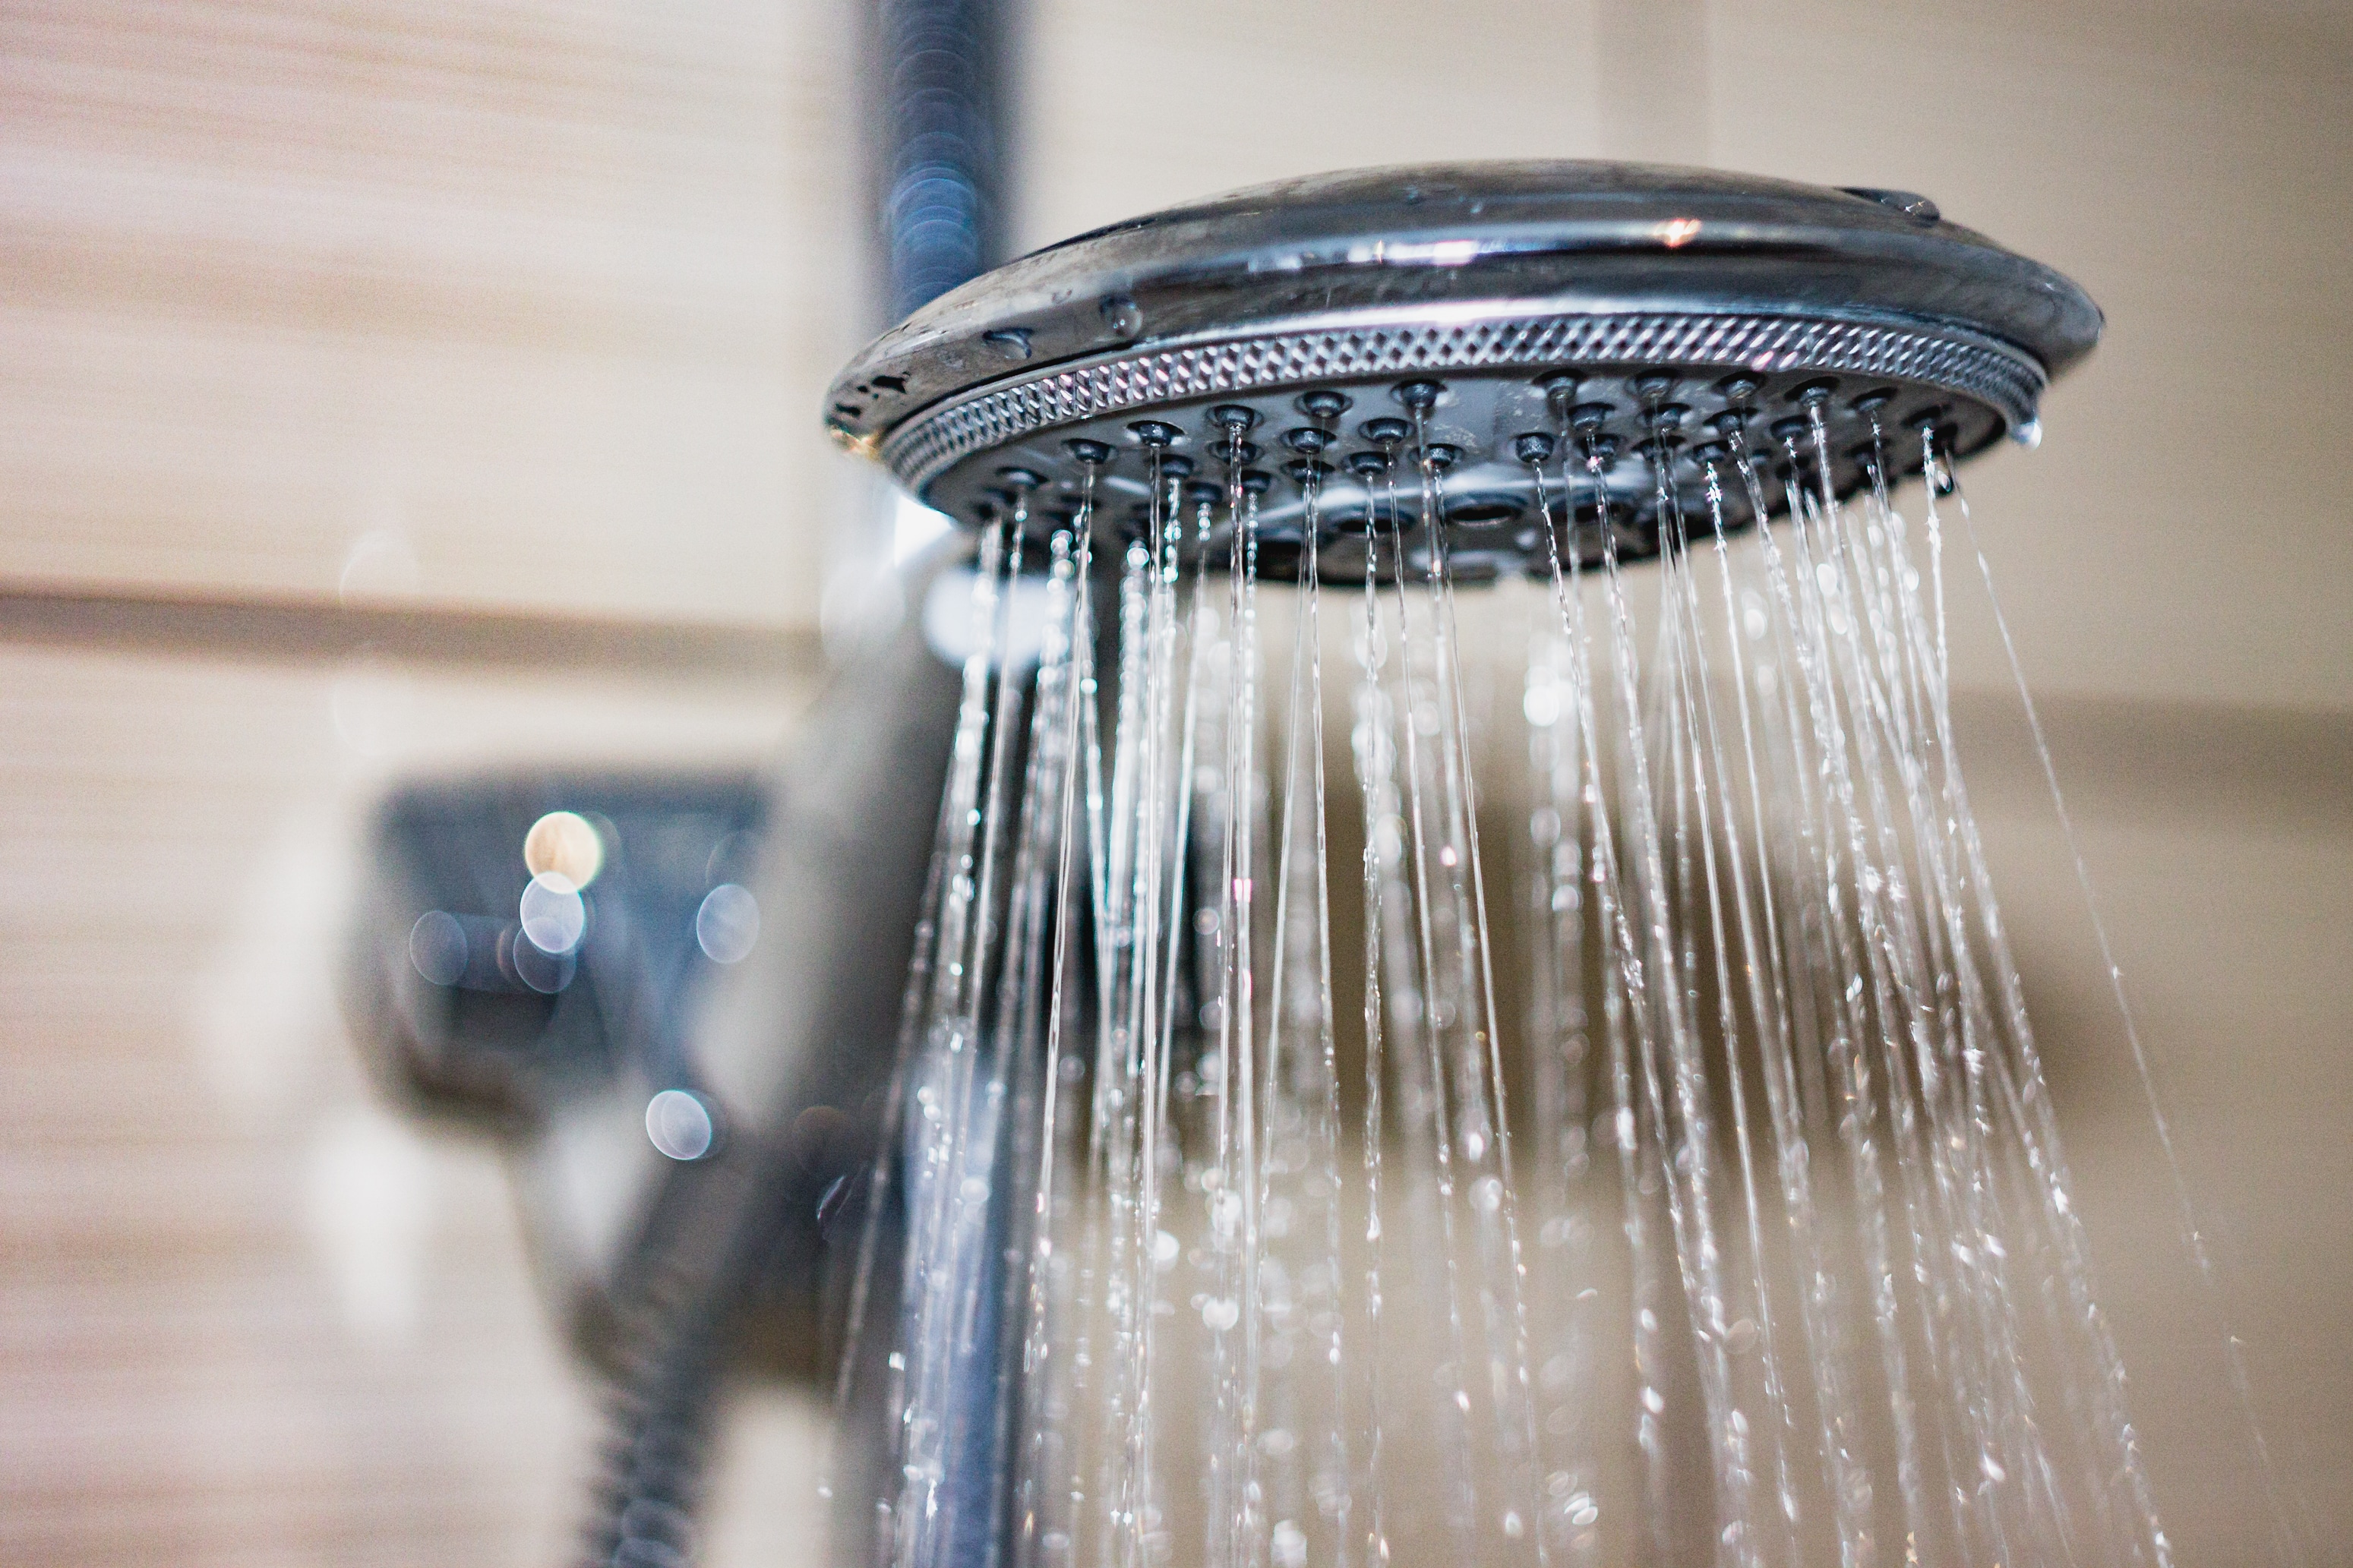 Shower Mixer Replacement Dubai